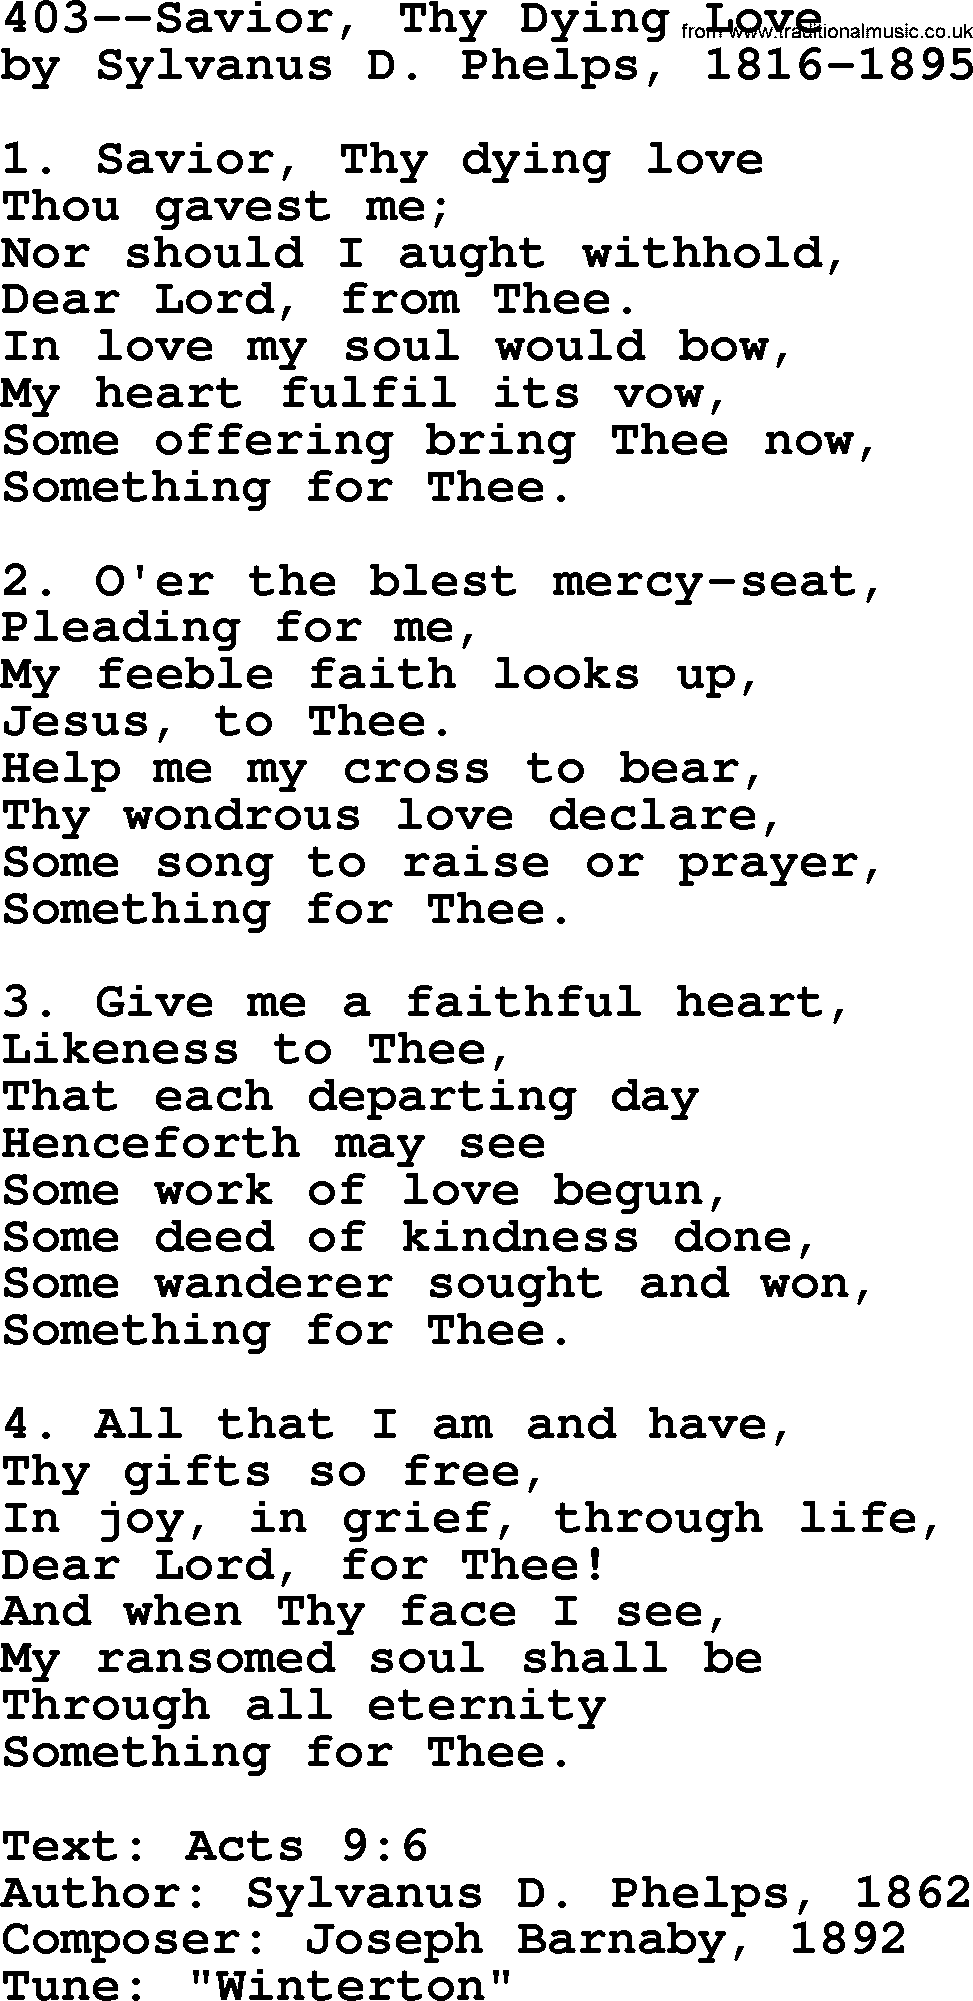 Lutheran Hymn: 403--Savior, Thy Dying Love.txt lyrics with PDF